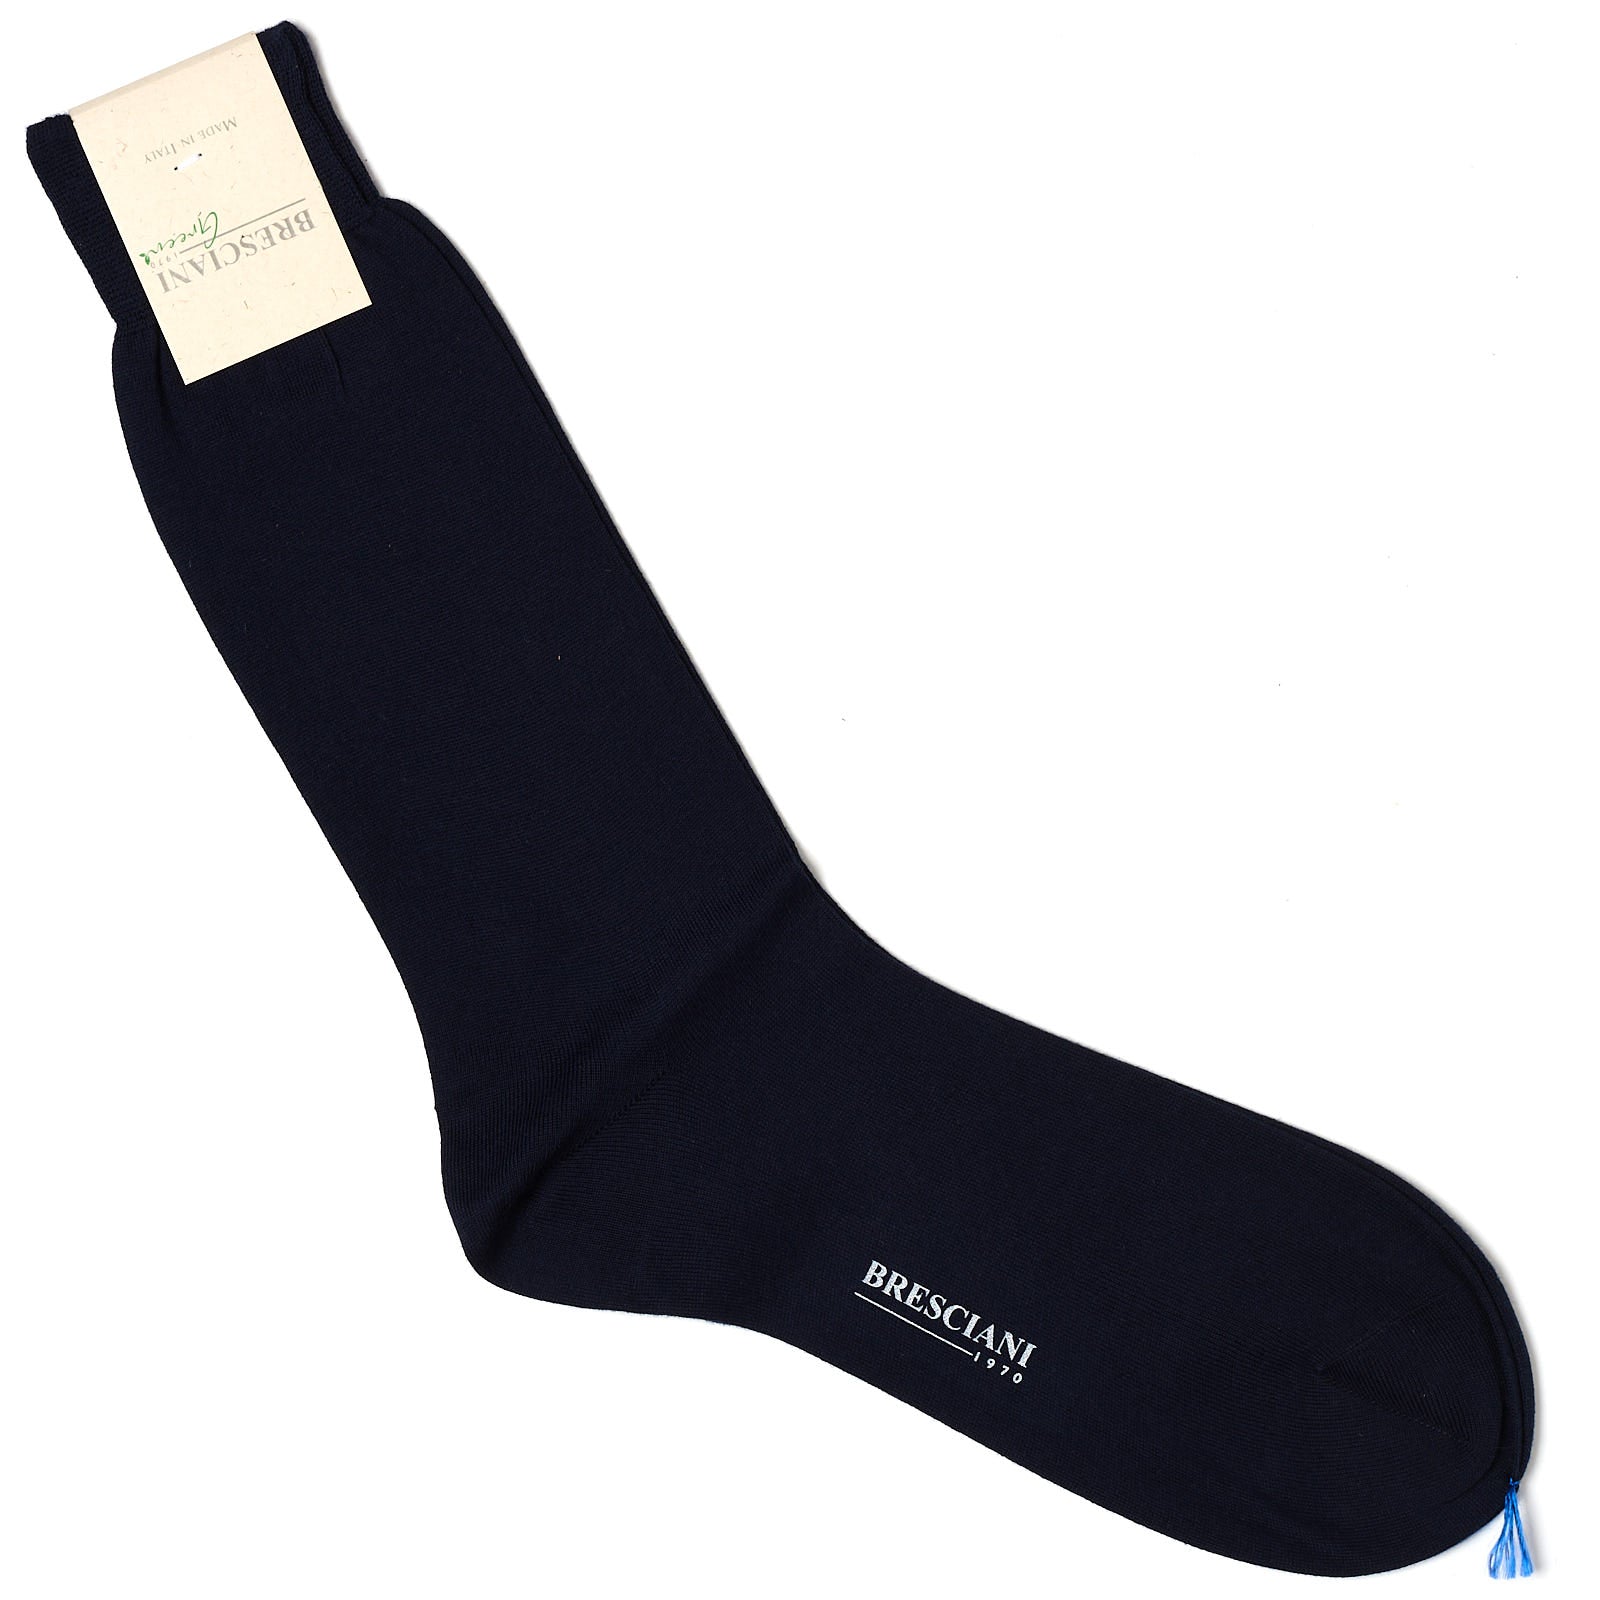 BRESCIANI "Lorenzo" Organic Cotton Mid Calf Length Socks M-L